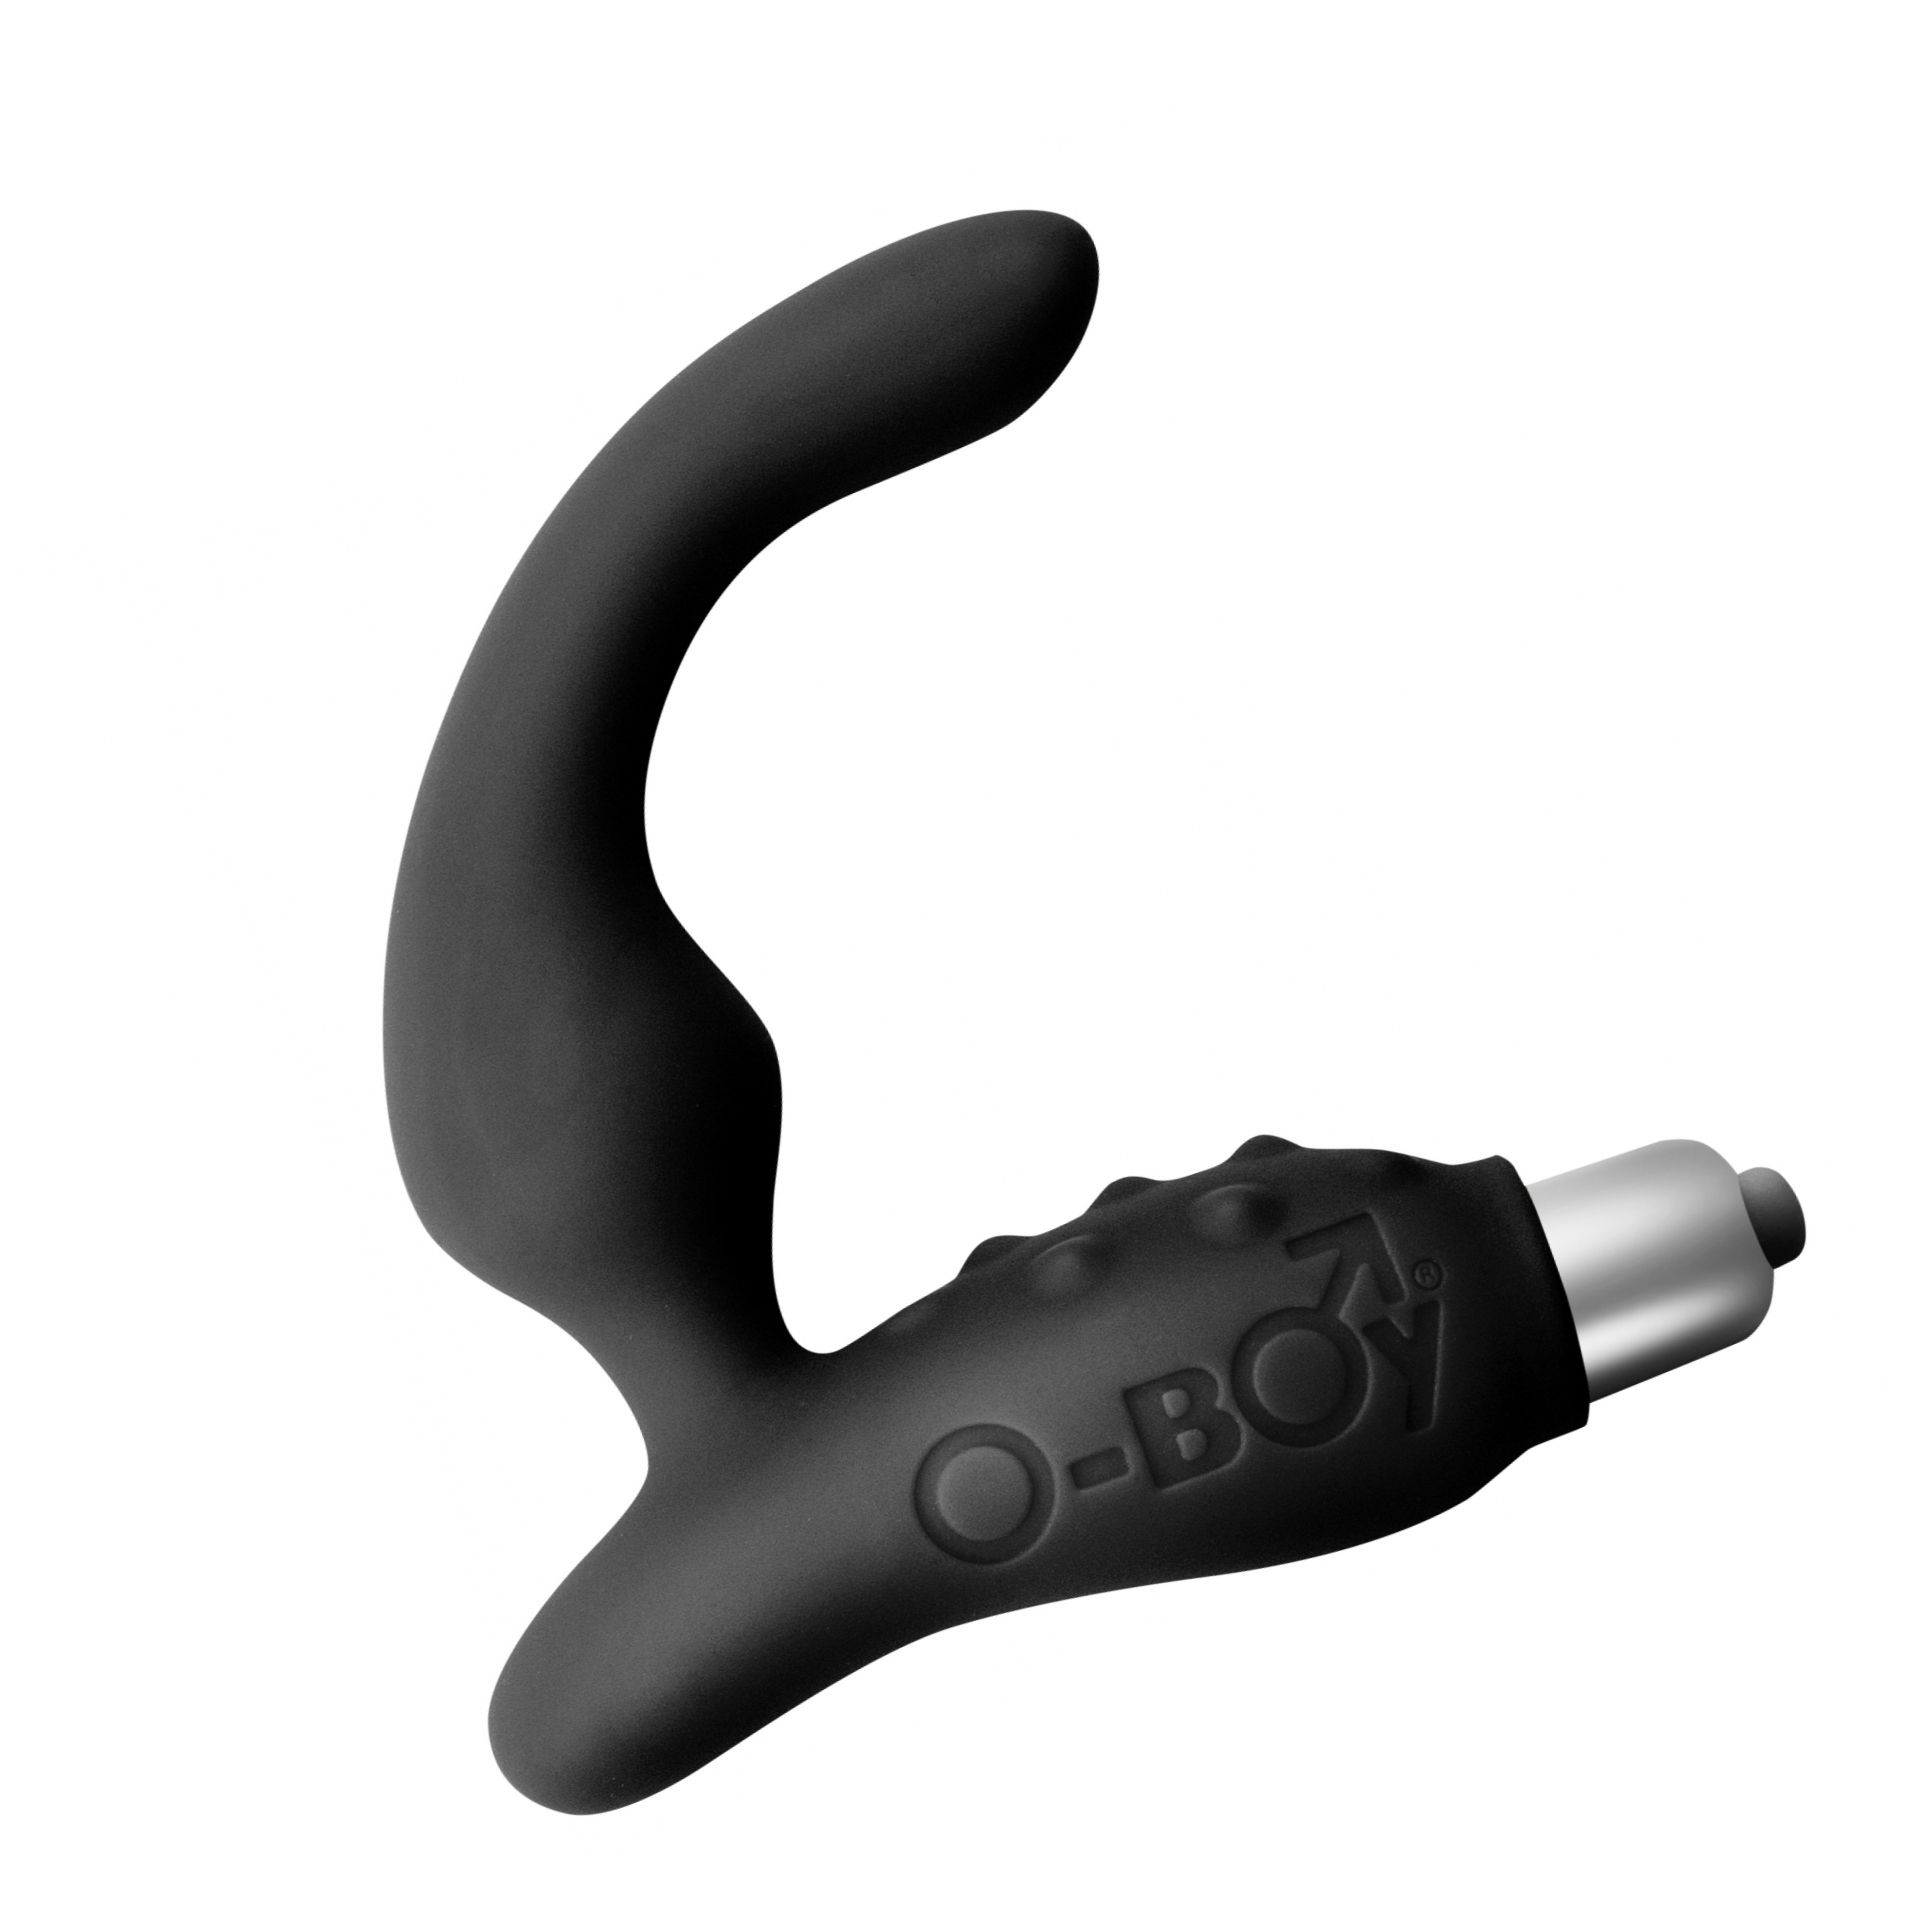 Vibrator Prostata O-Boy 7 Negru